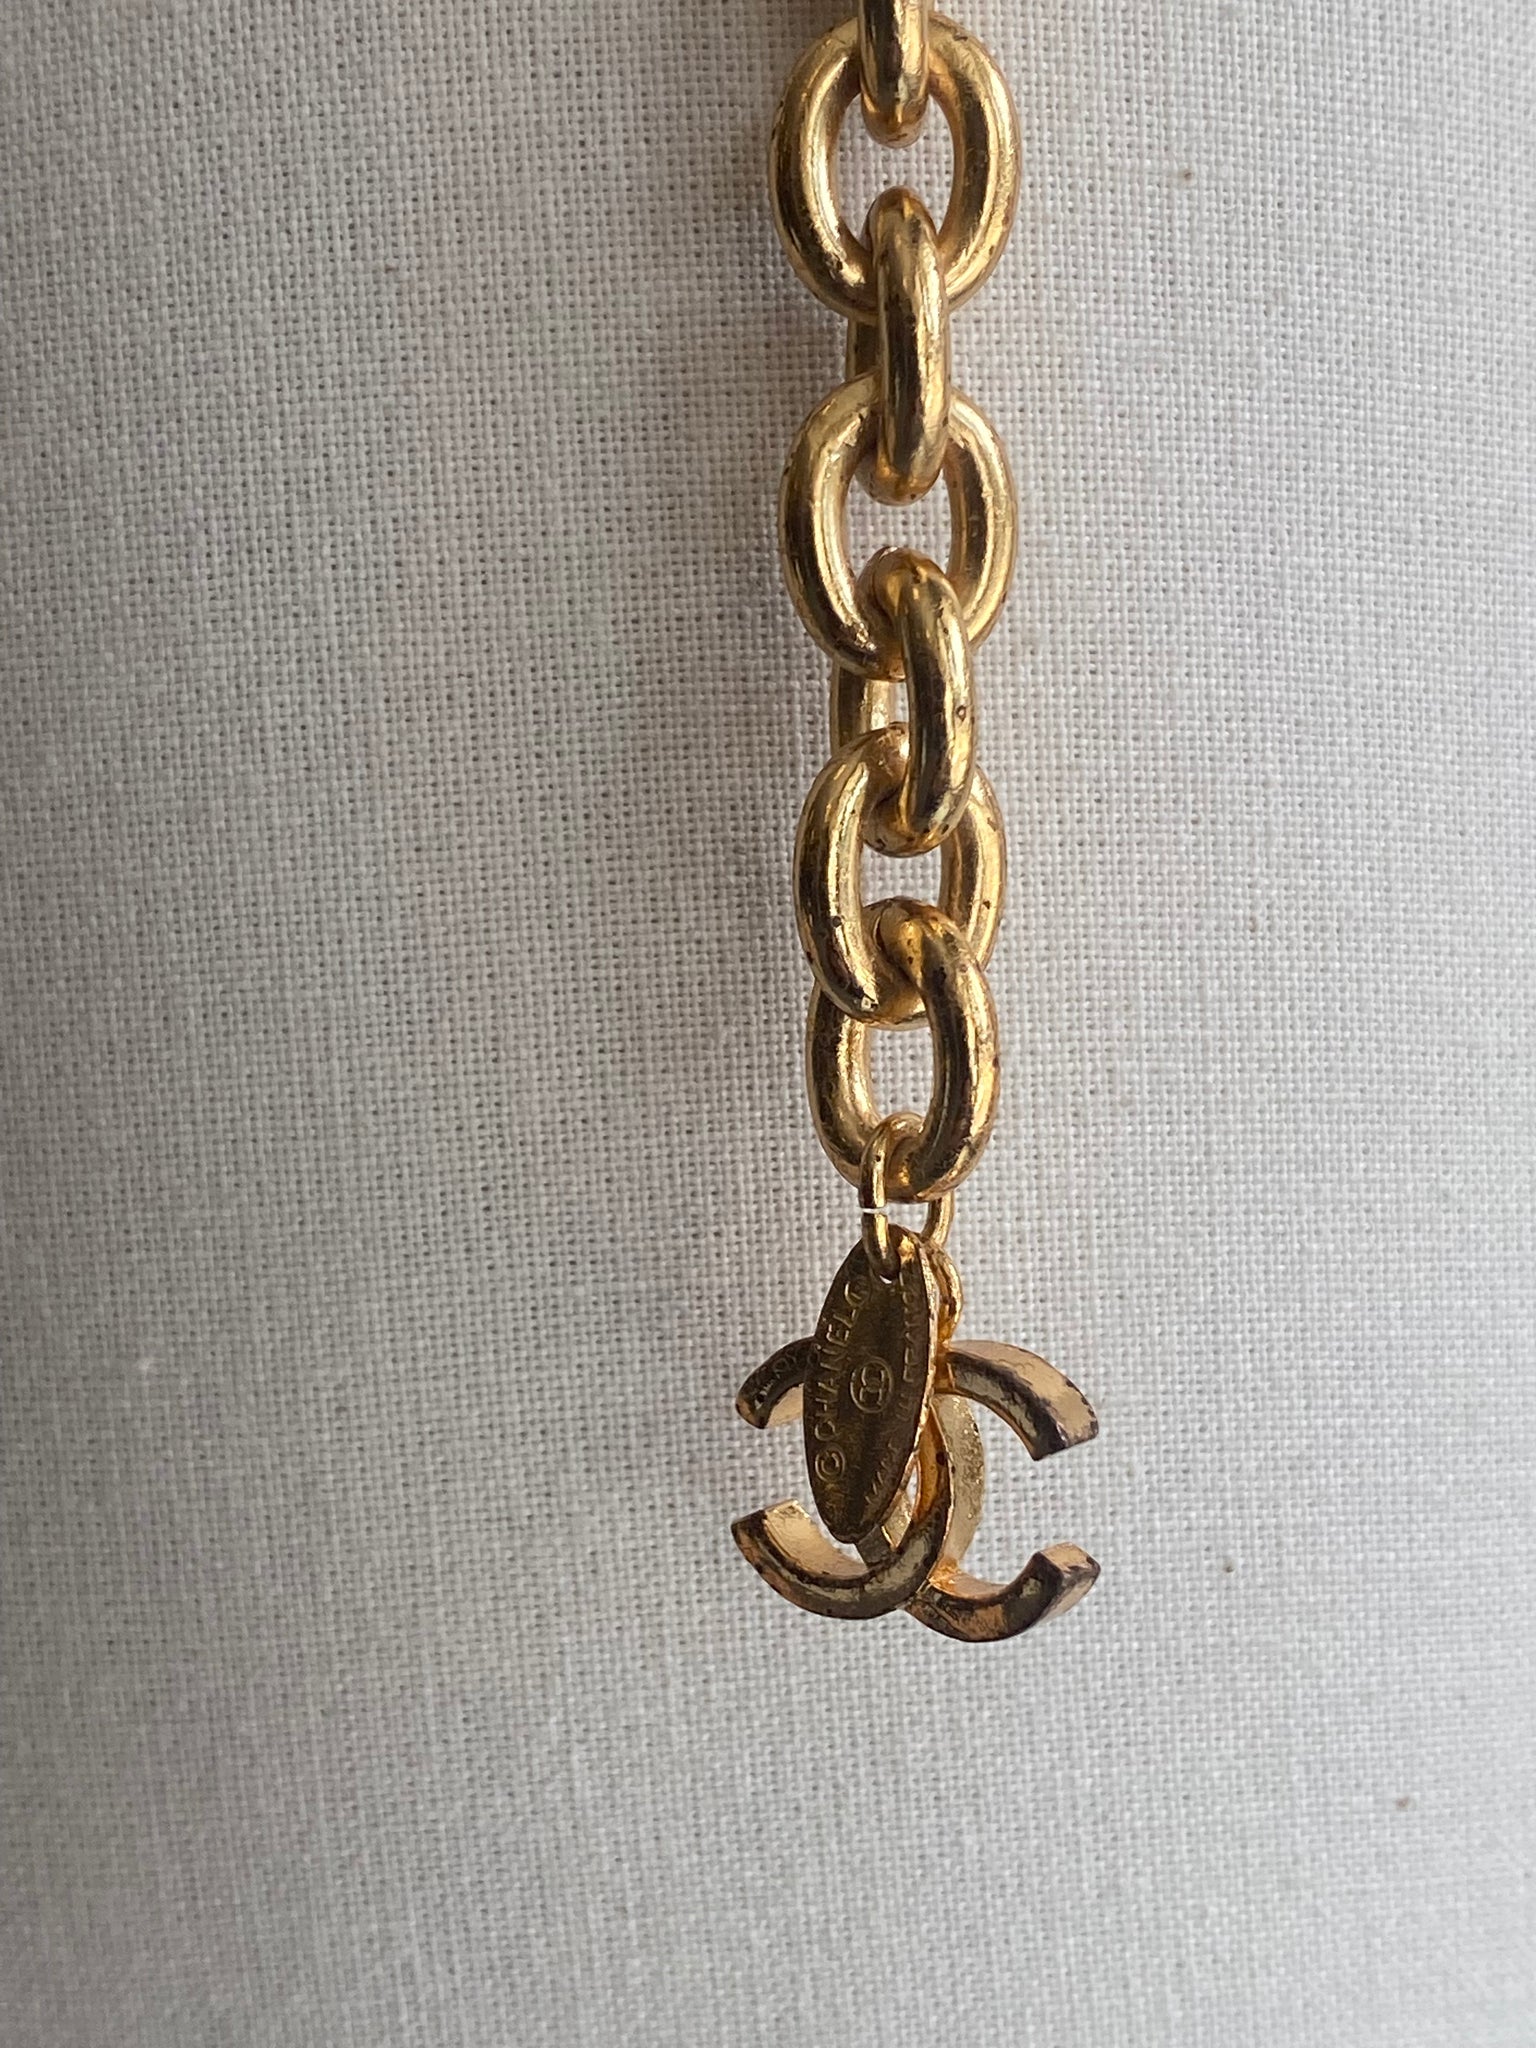 Vintage Chain Belt/Necklace